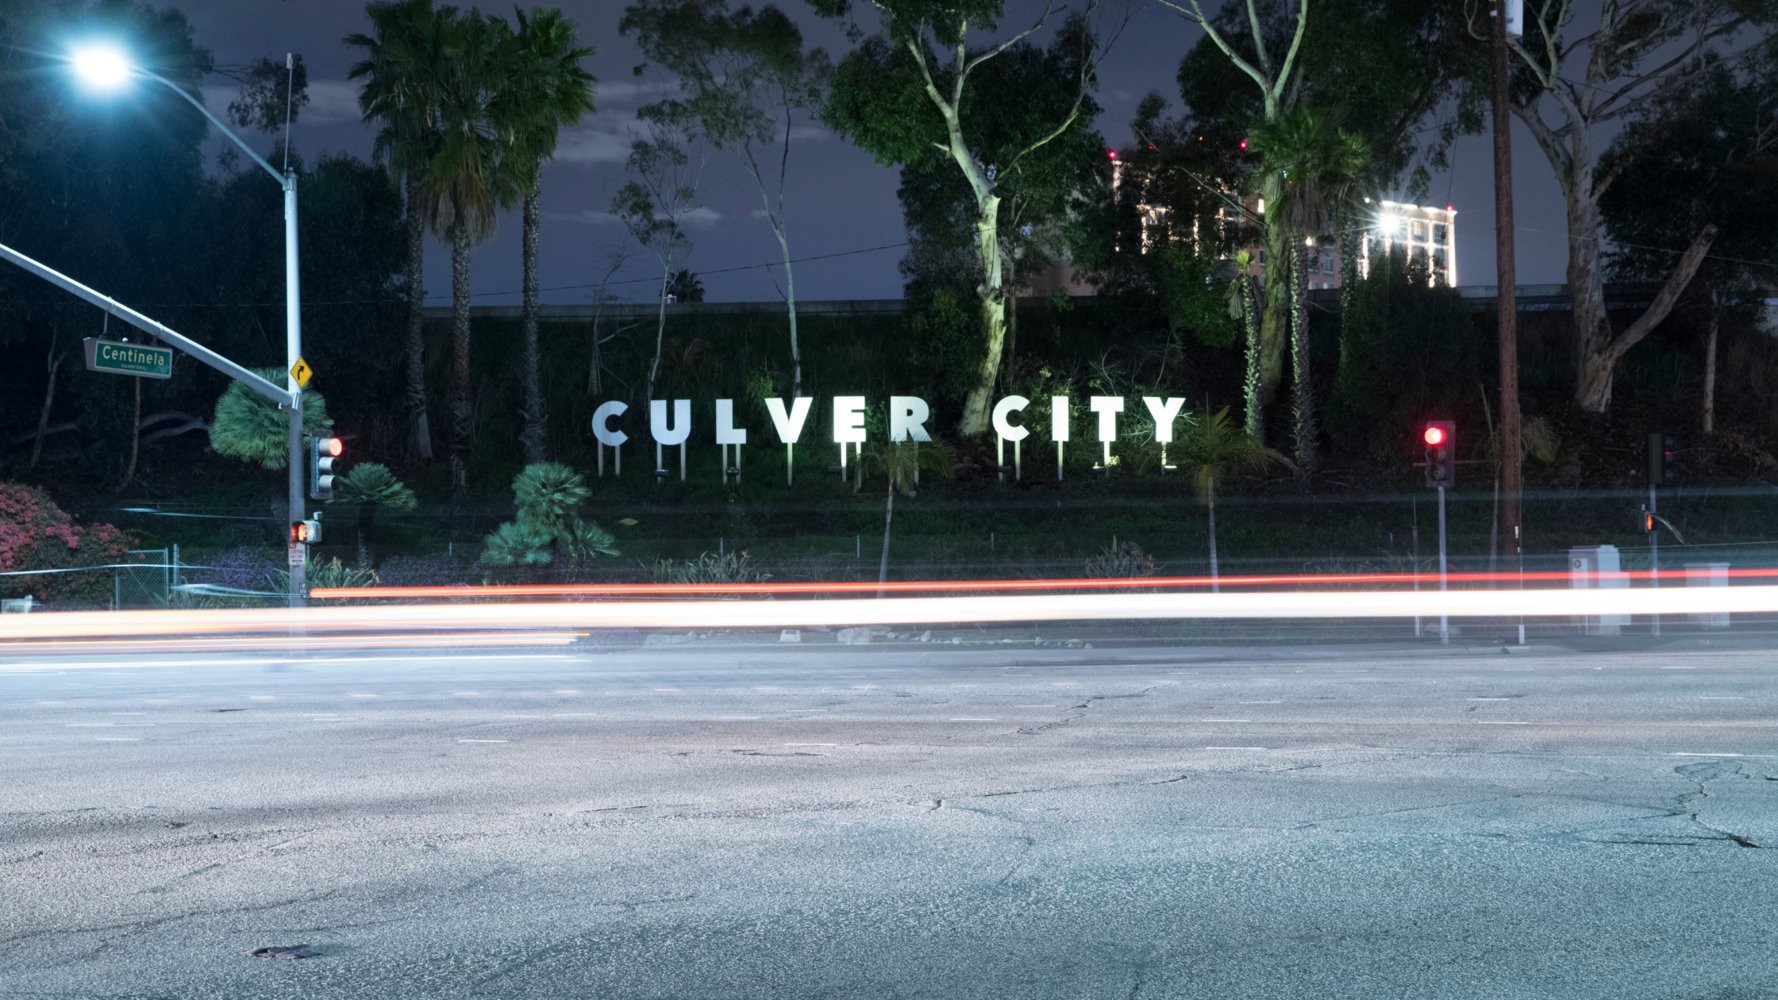 Culver City Signage at night near a Culver City Body Shop